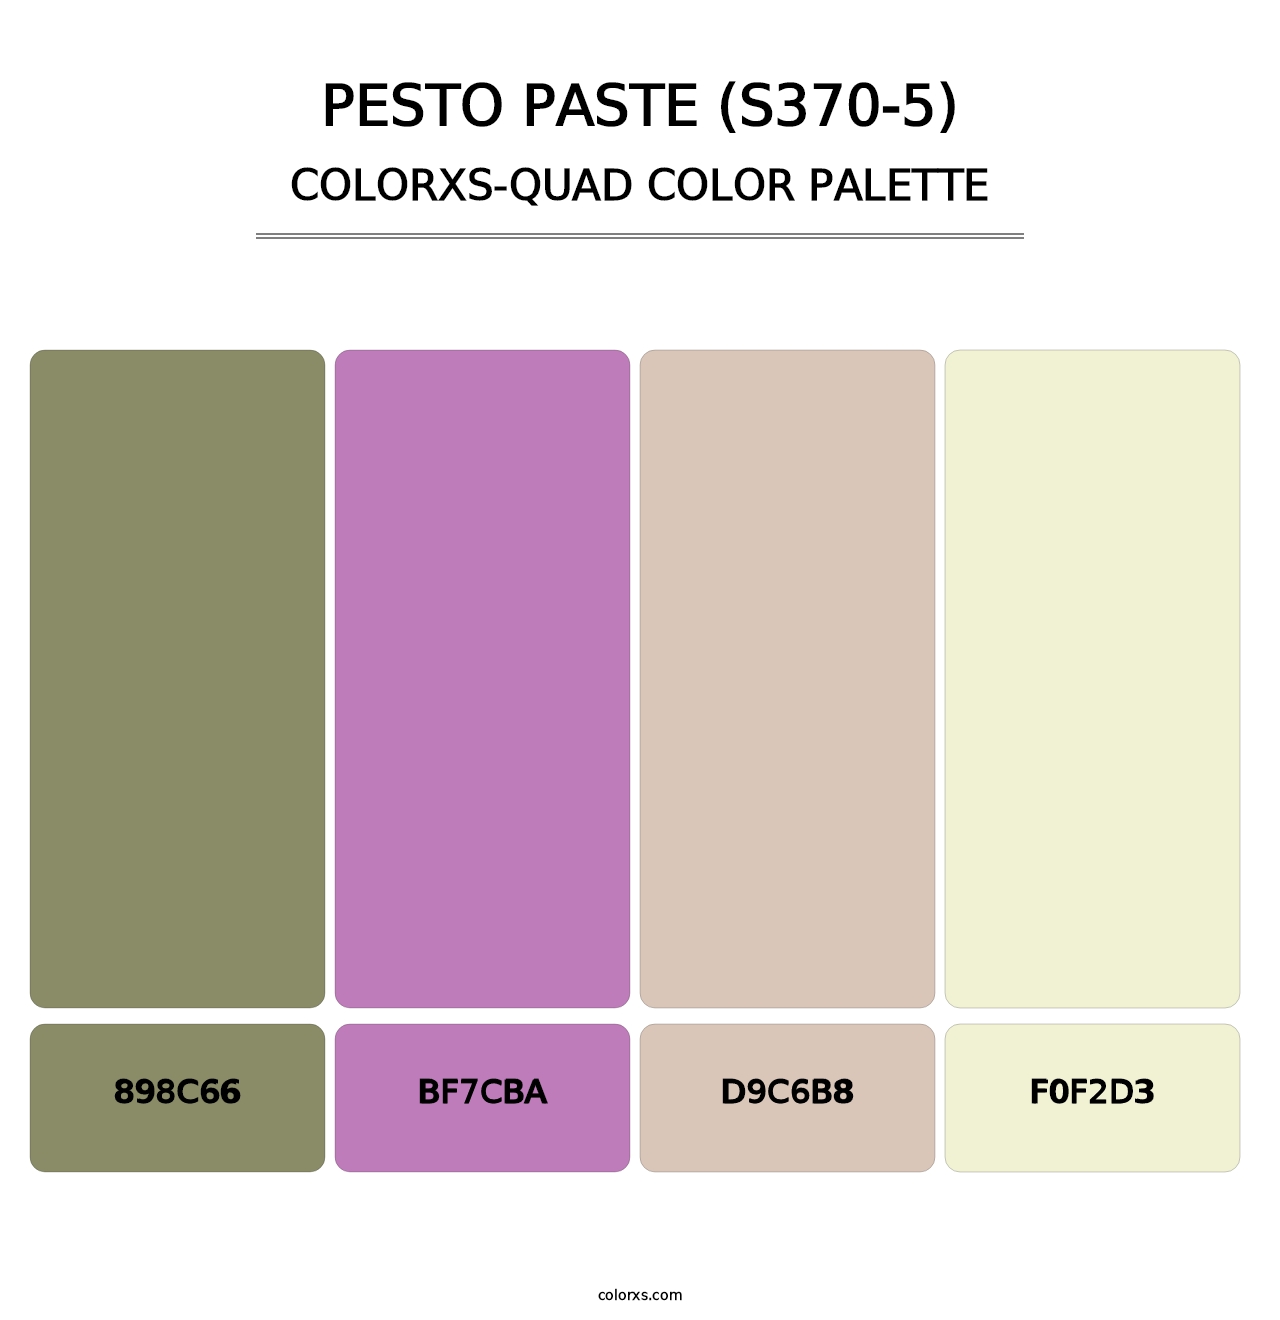 Pesto Paste (S370-5) - Colorxs Quad Palette